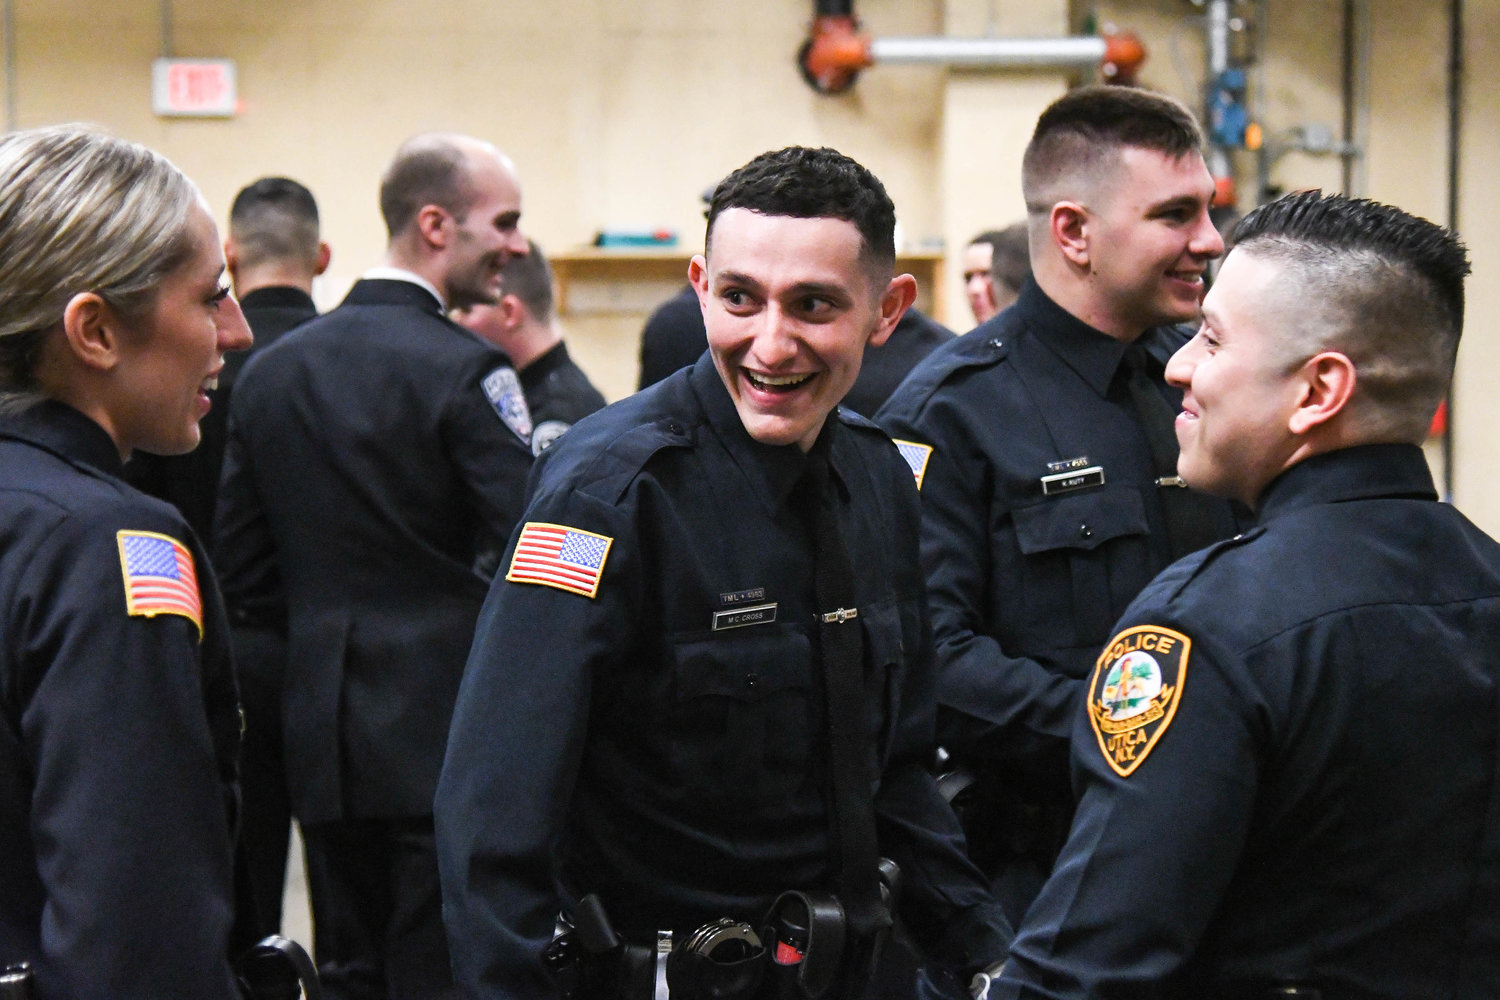 Mohawk Valley Police Academy NY New York Police Sheriff Patch 